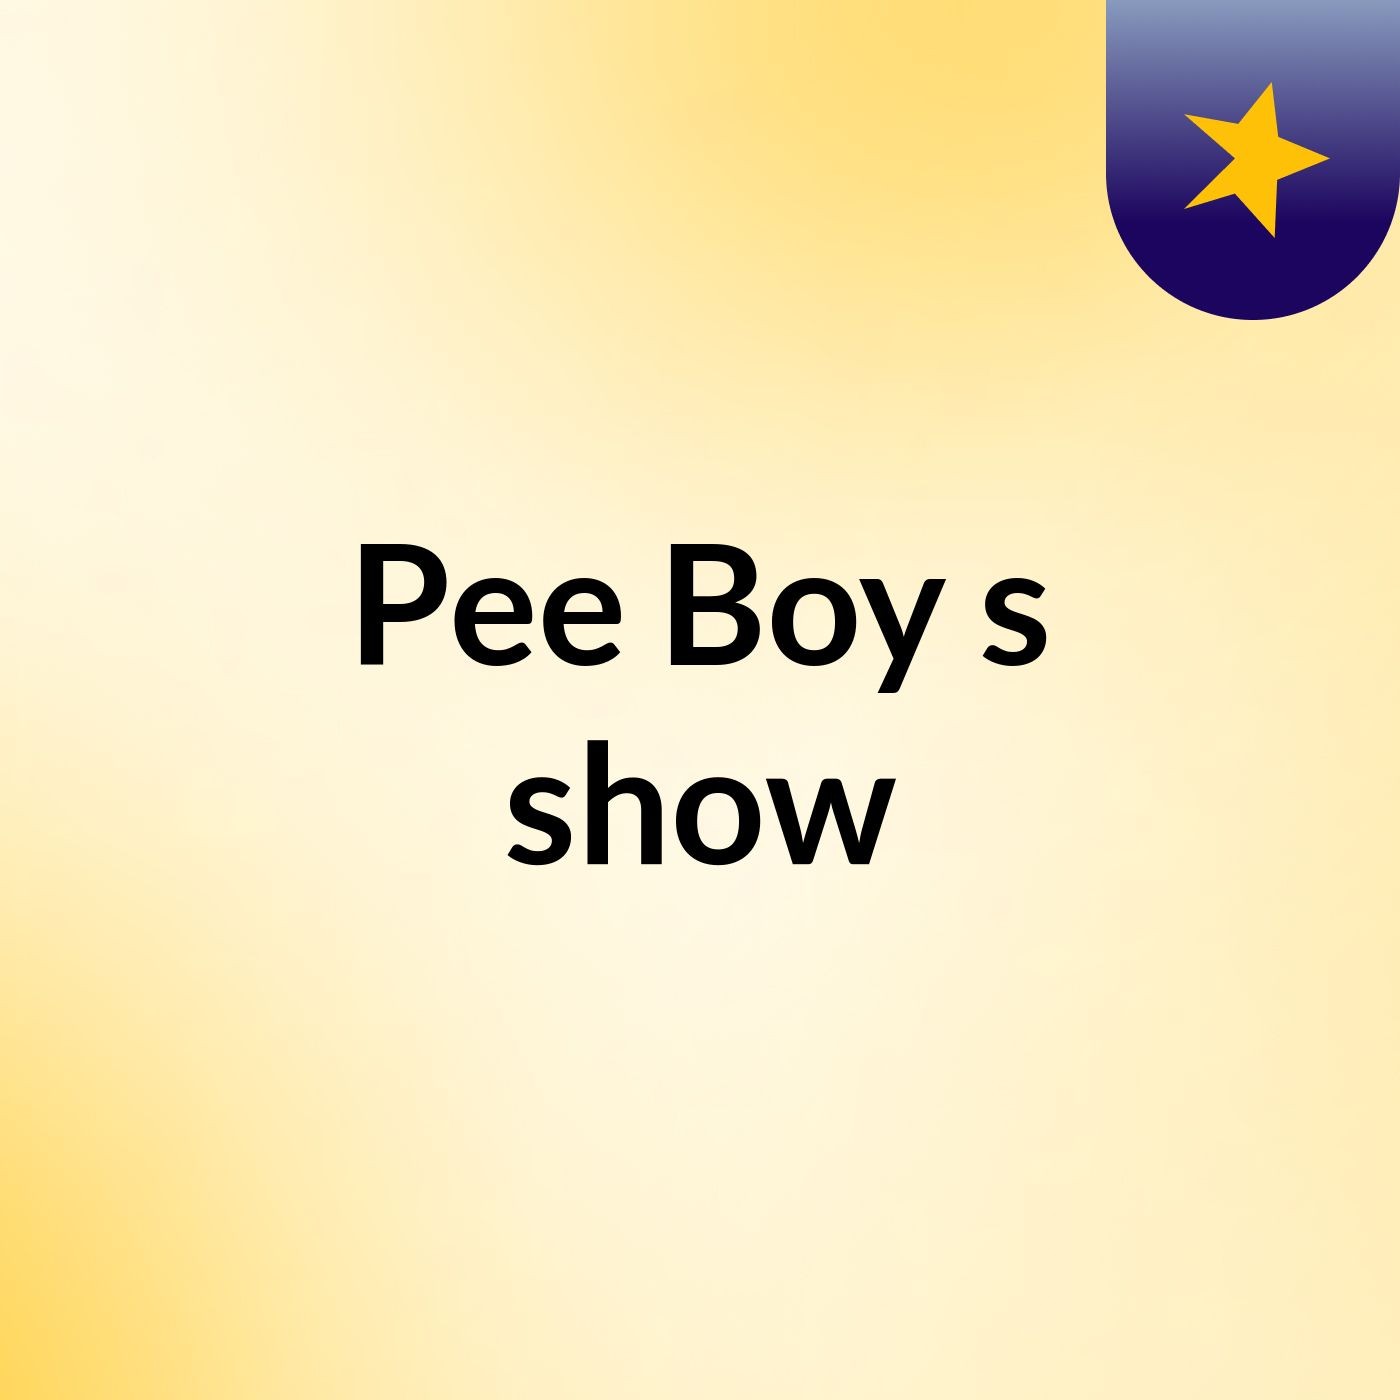 Pee Boy's show